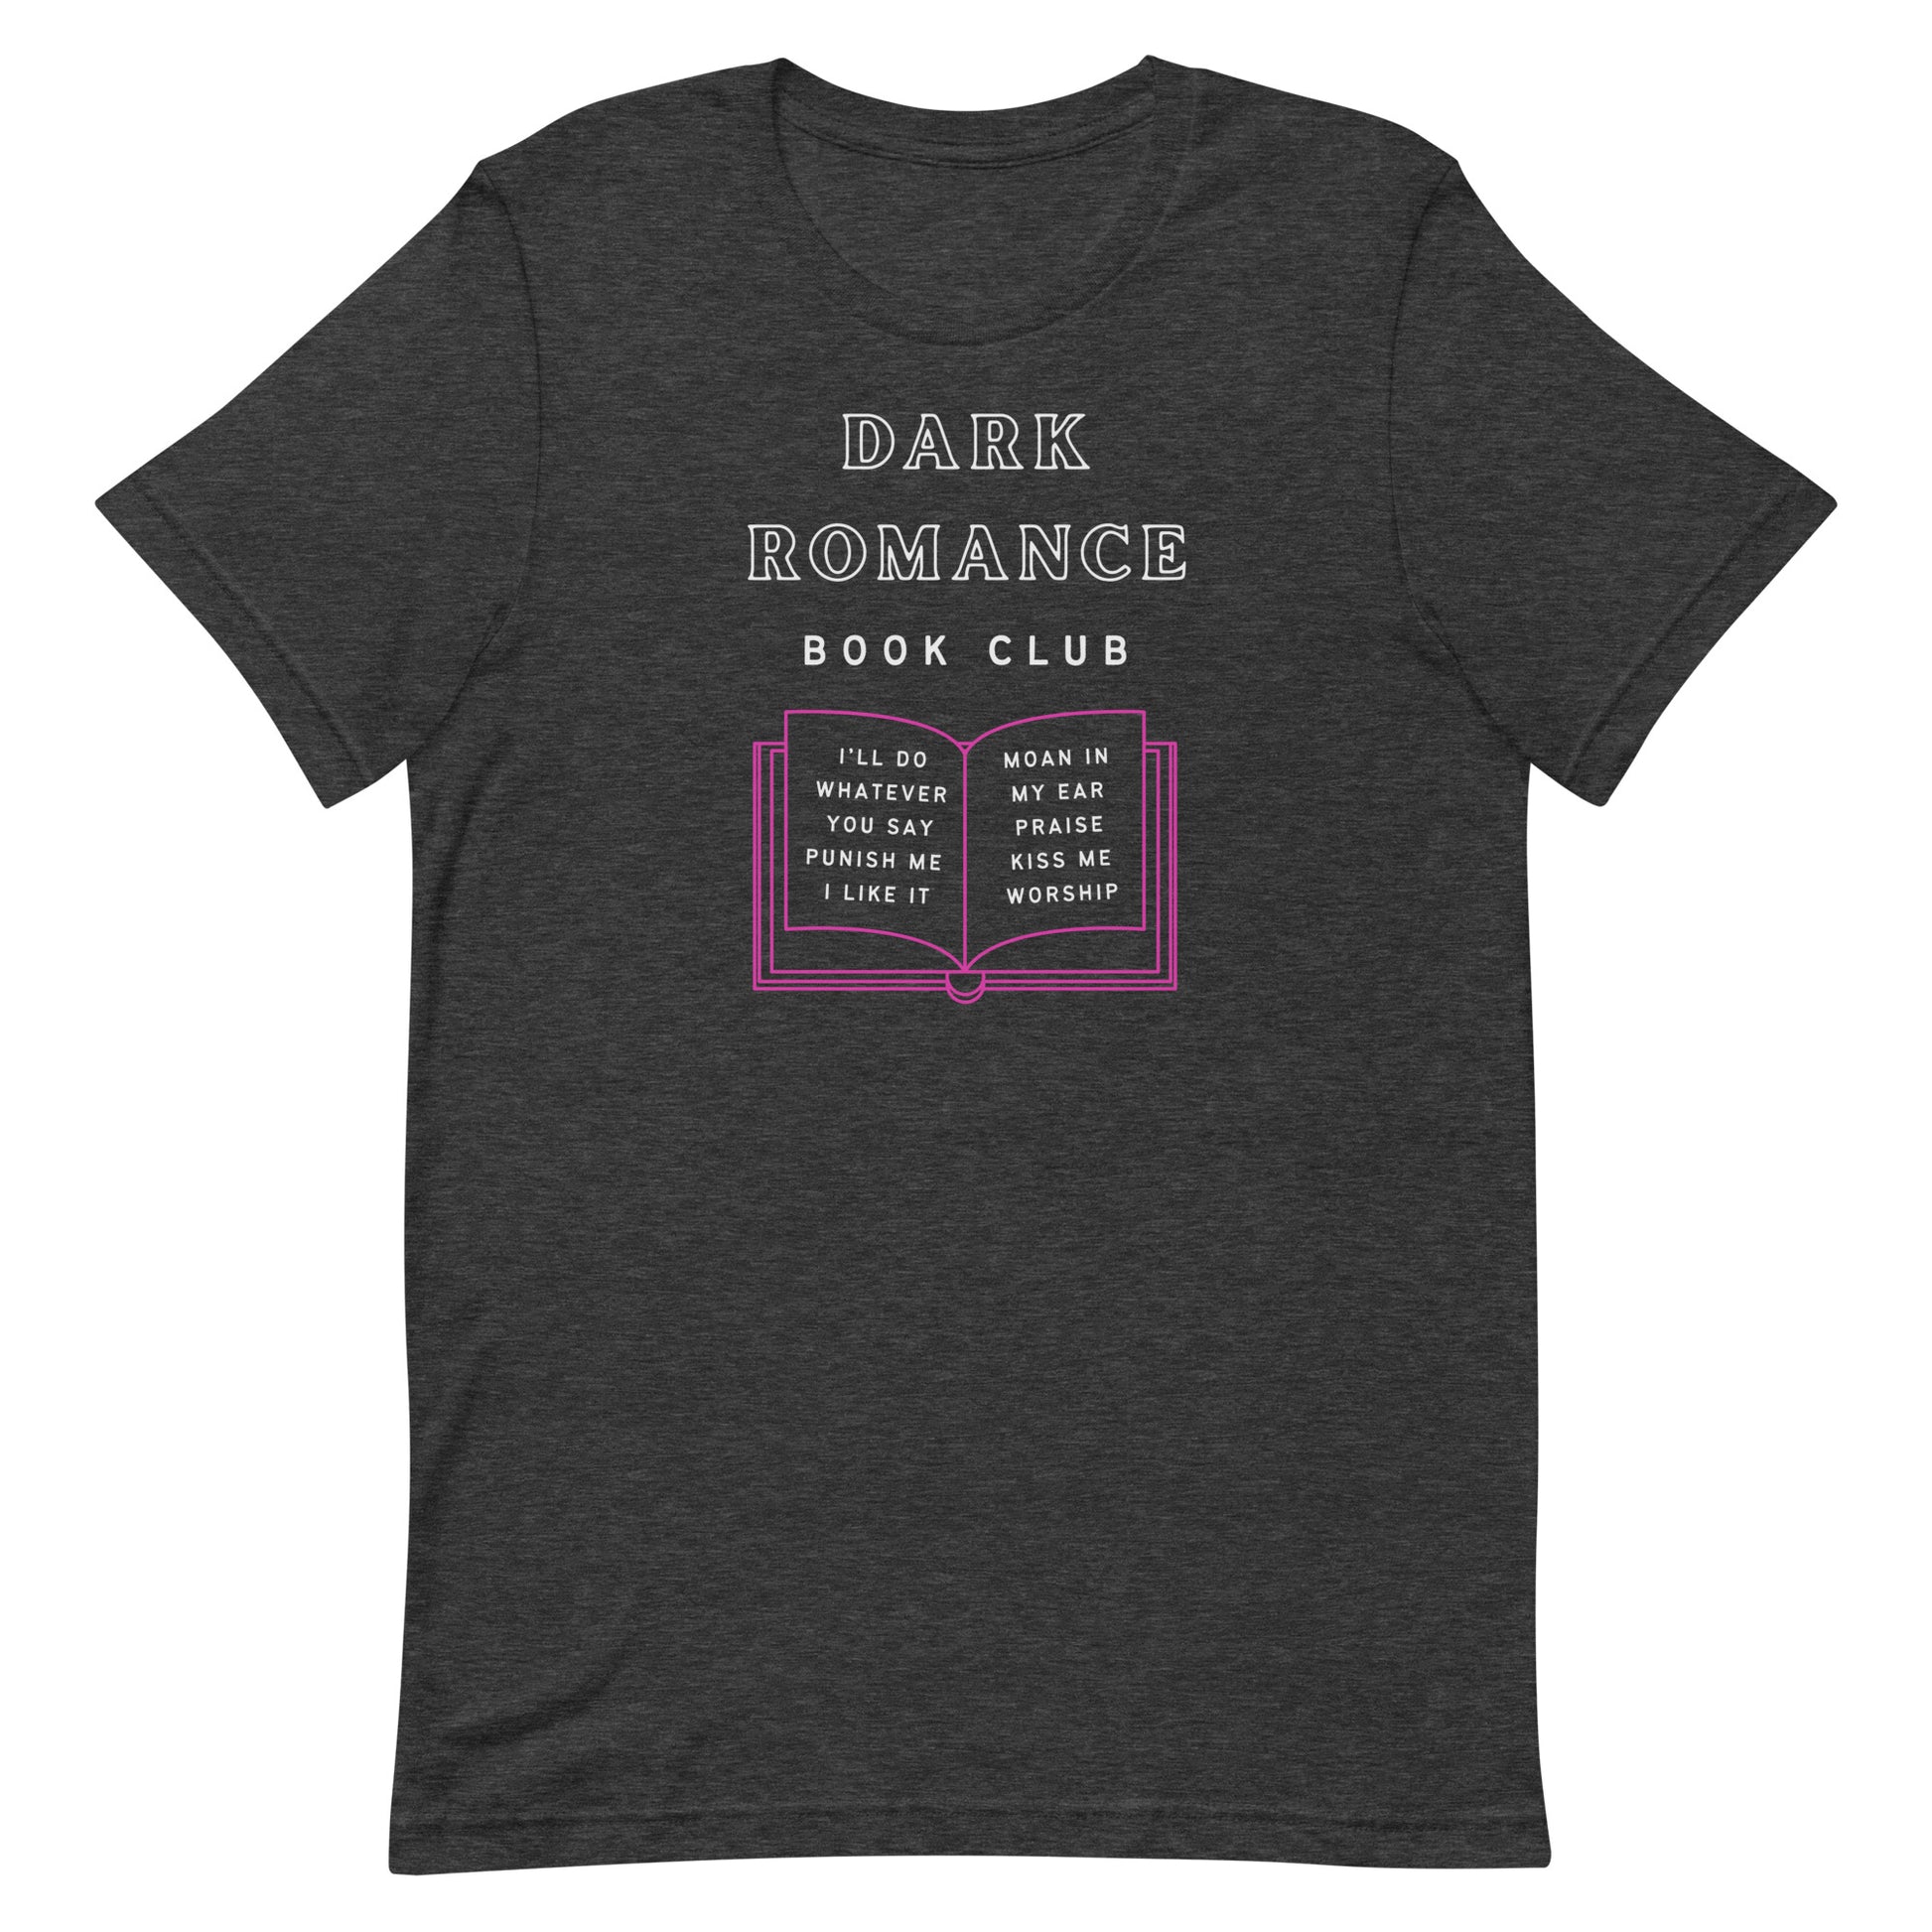 Dark Romance Book club Tee Shirt Explore the taboo